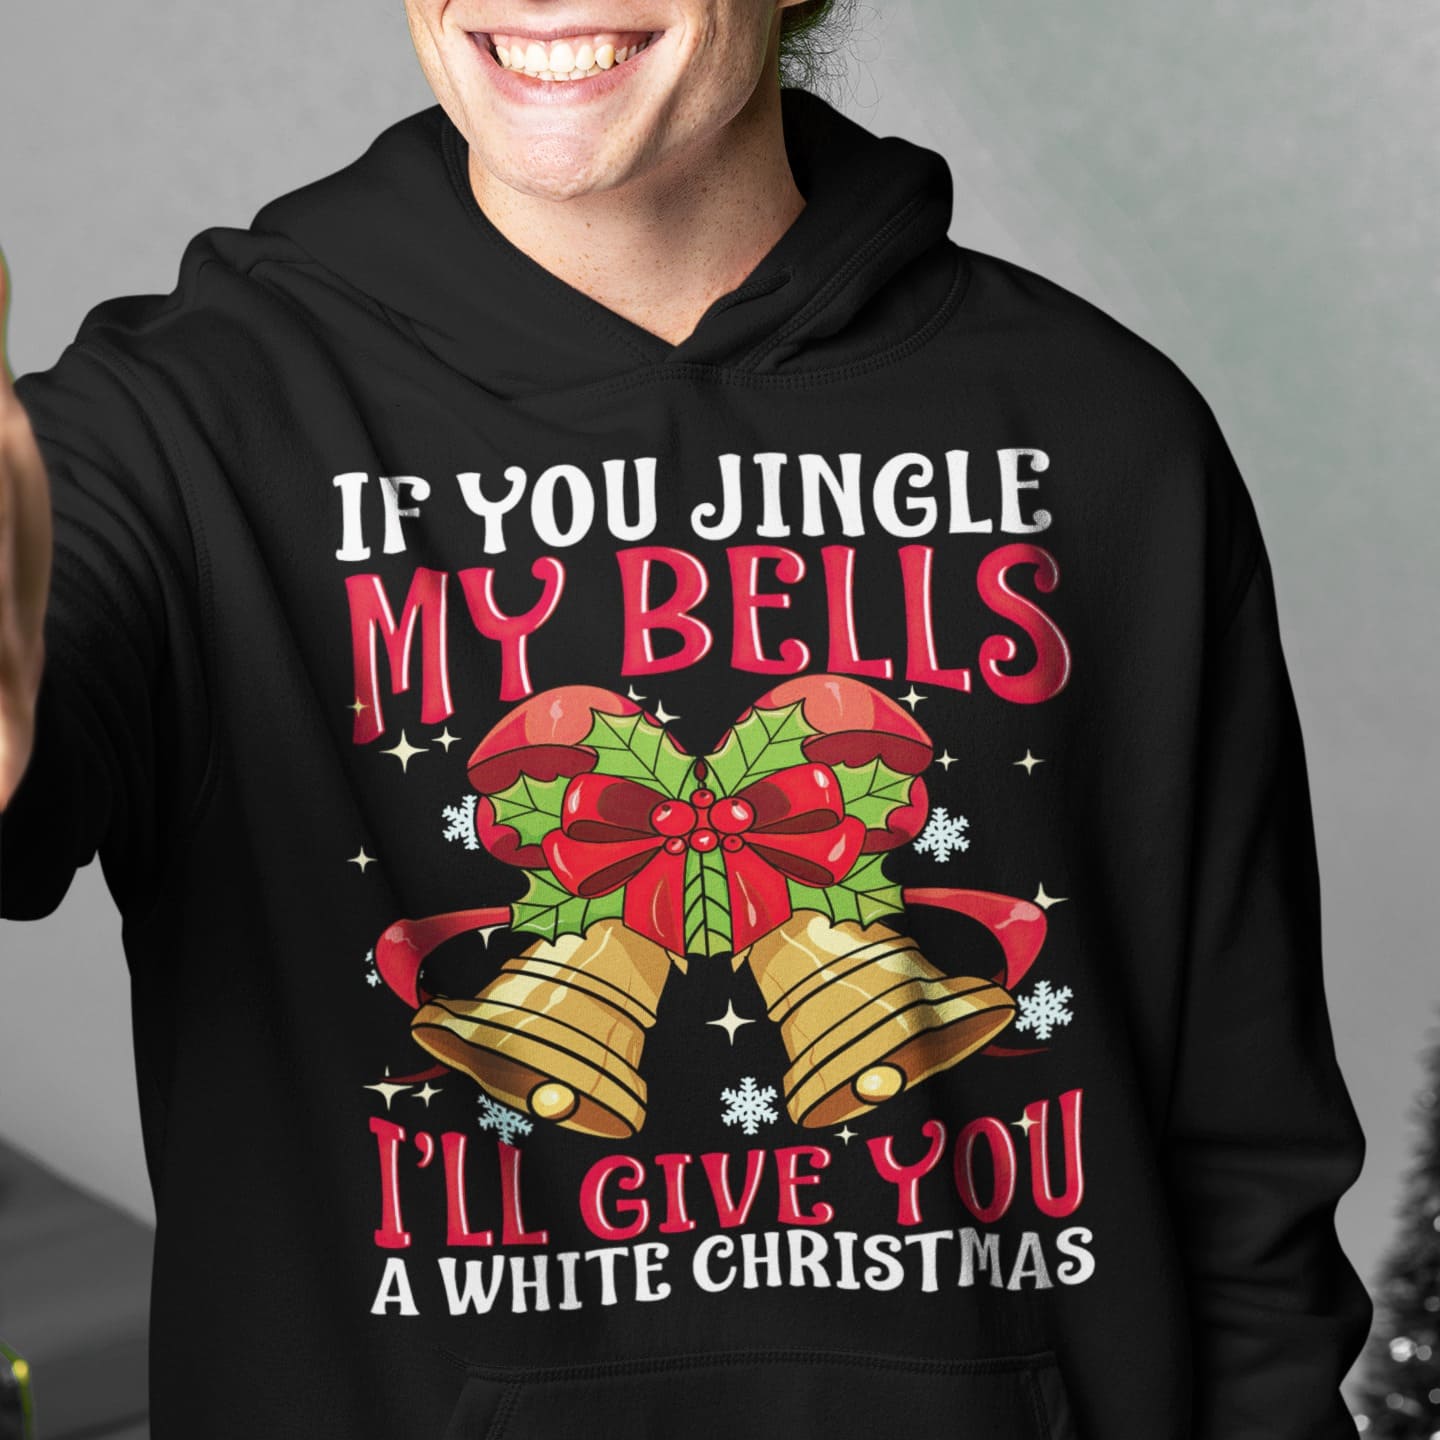 If you jingle my bells I'll give you a white Christmas - Jingle bells ...